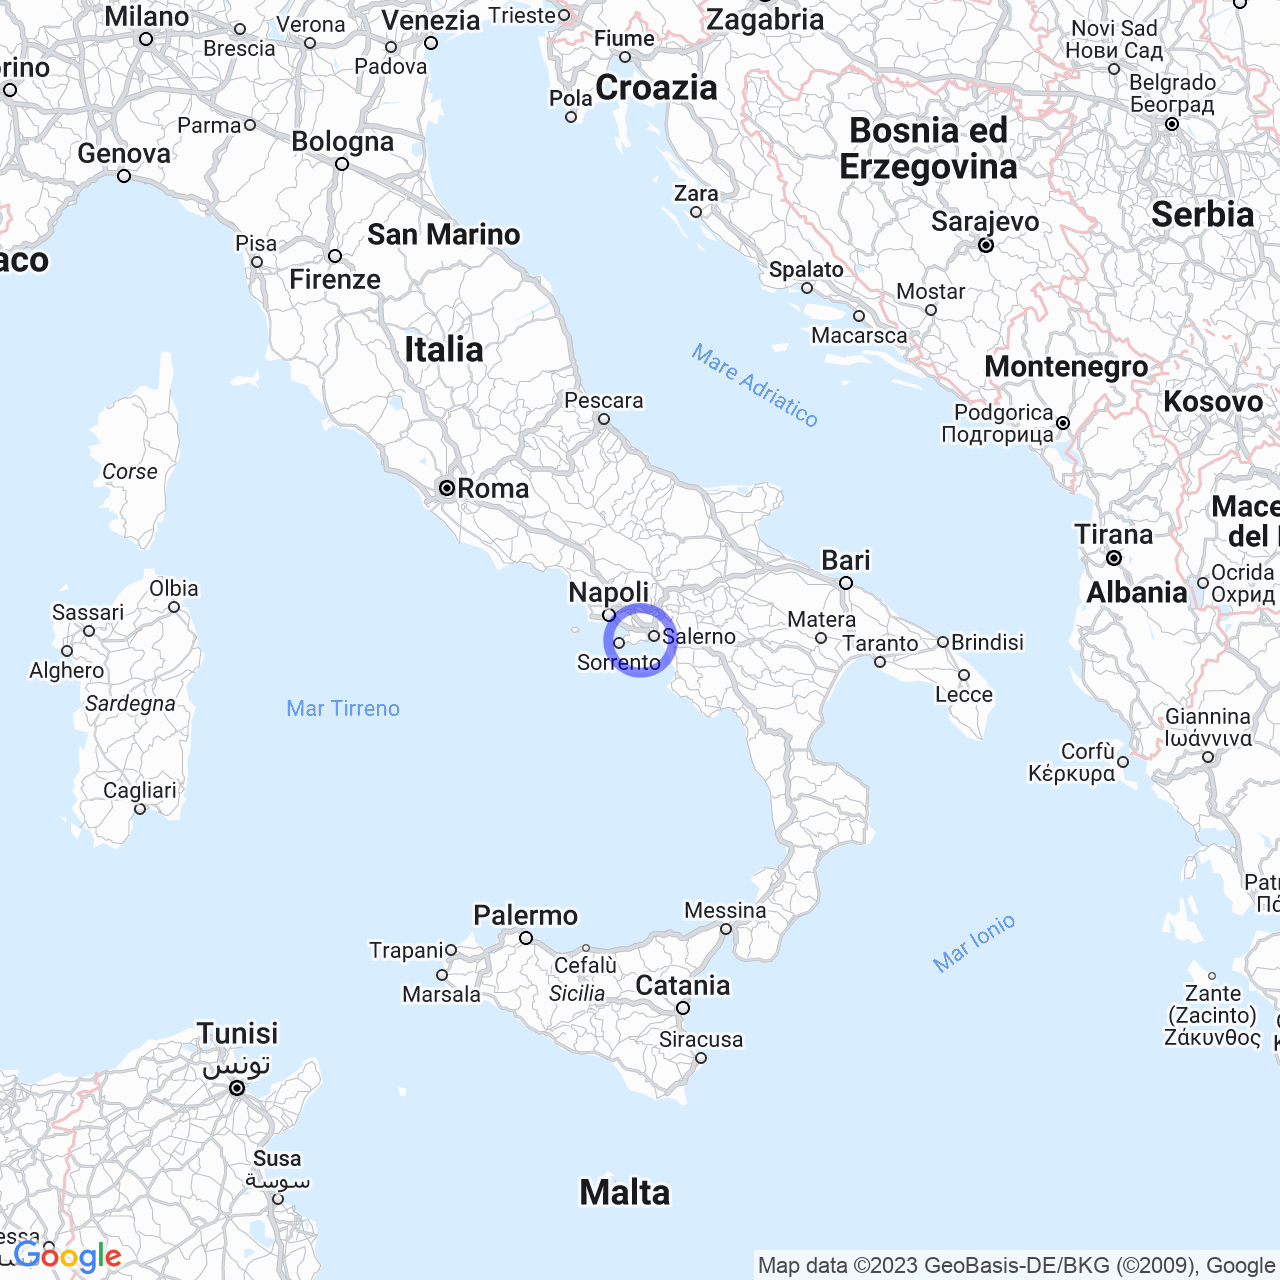 Ravello: the city of music on the Amalfi Coast.